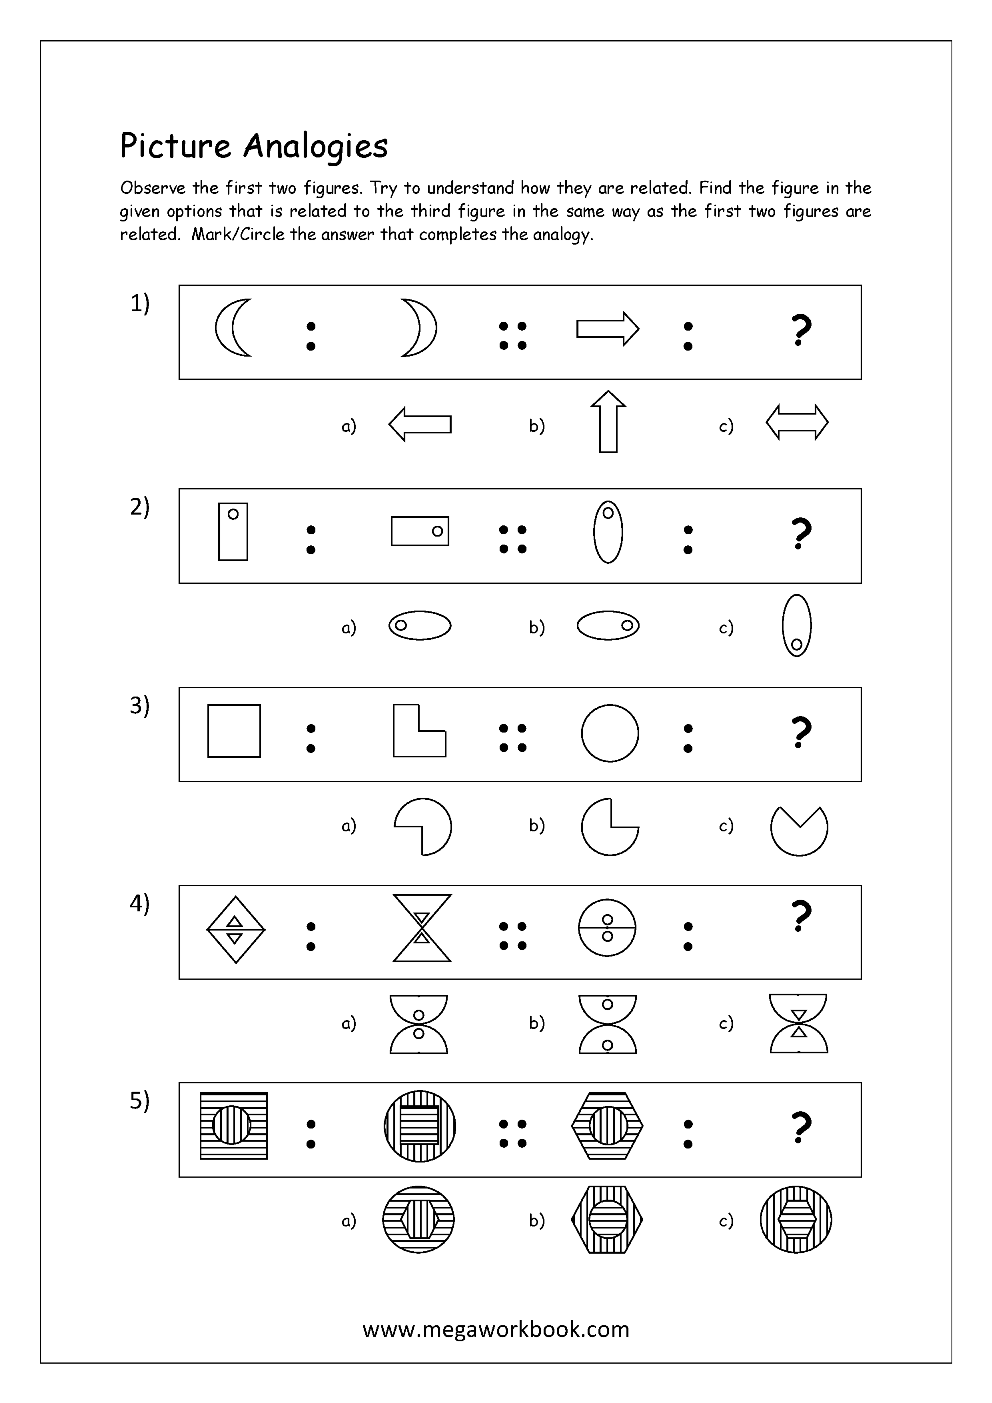 free-printable-picture-analogy-worksheets-logical-reasoning